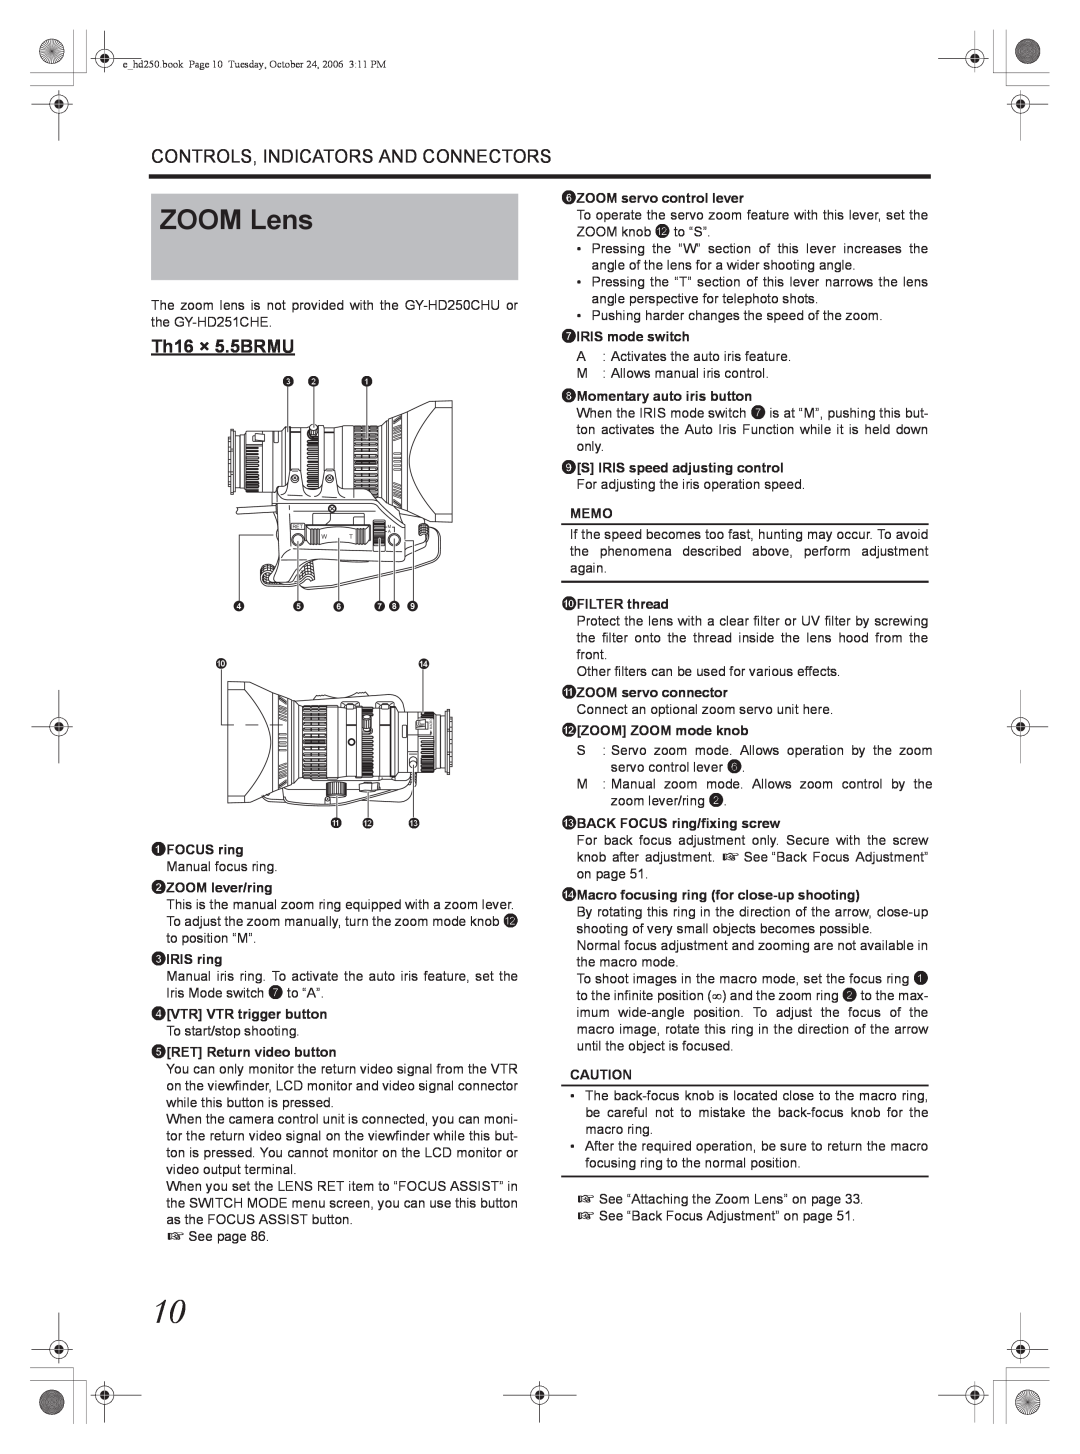 JVC GY-HD250 ZOOM Lens, Th16 × 5.5BRMU, 1FOCUS ring Manual focus ring 2ZOOM lever/ring, 3IRIS ring, 7IRIS mode switch 